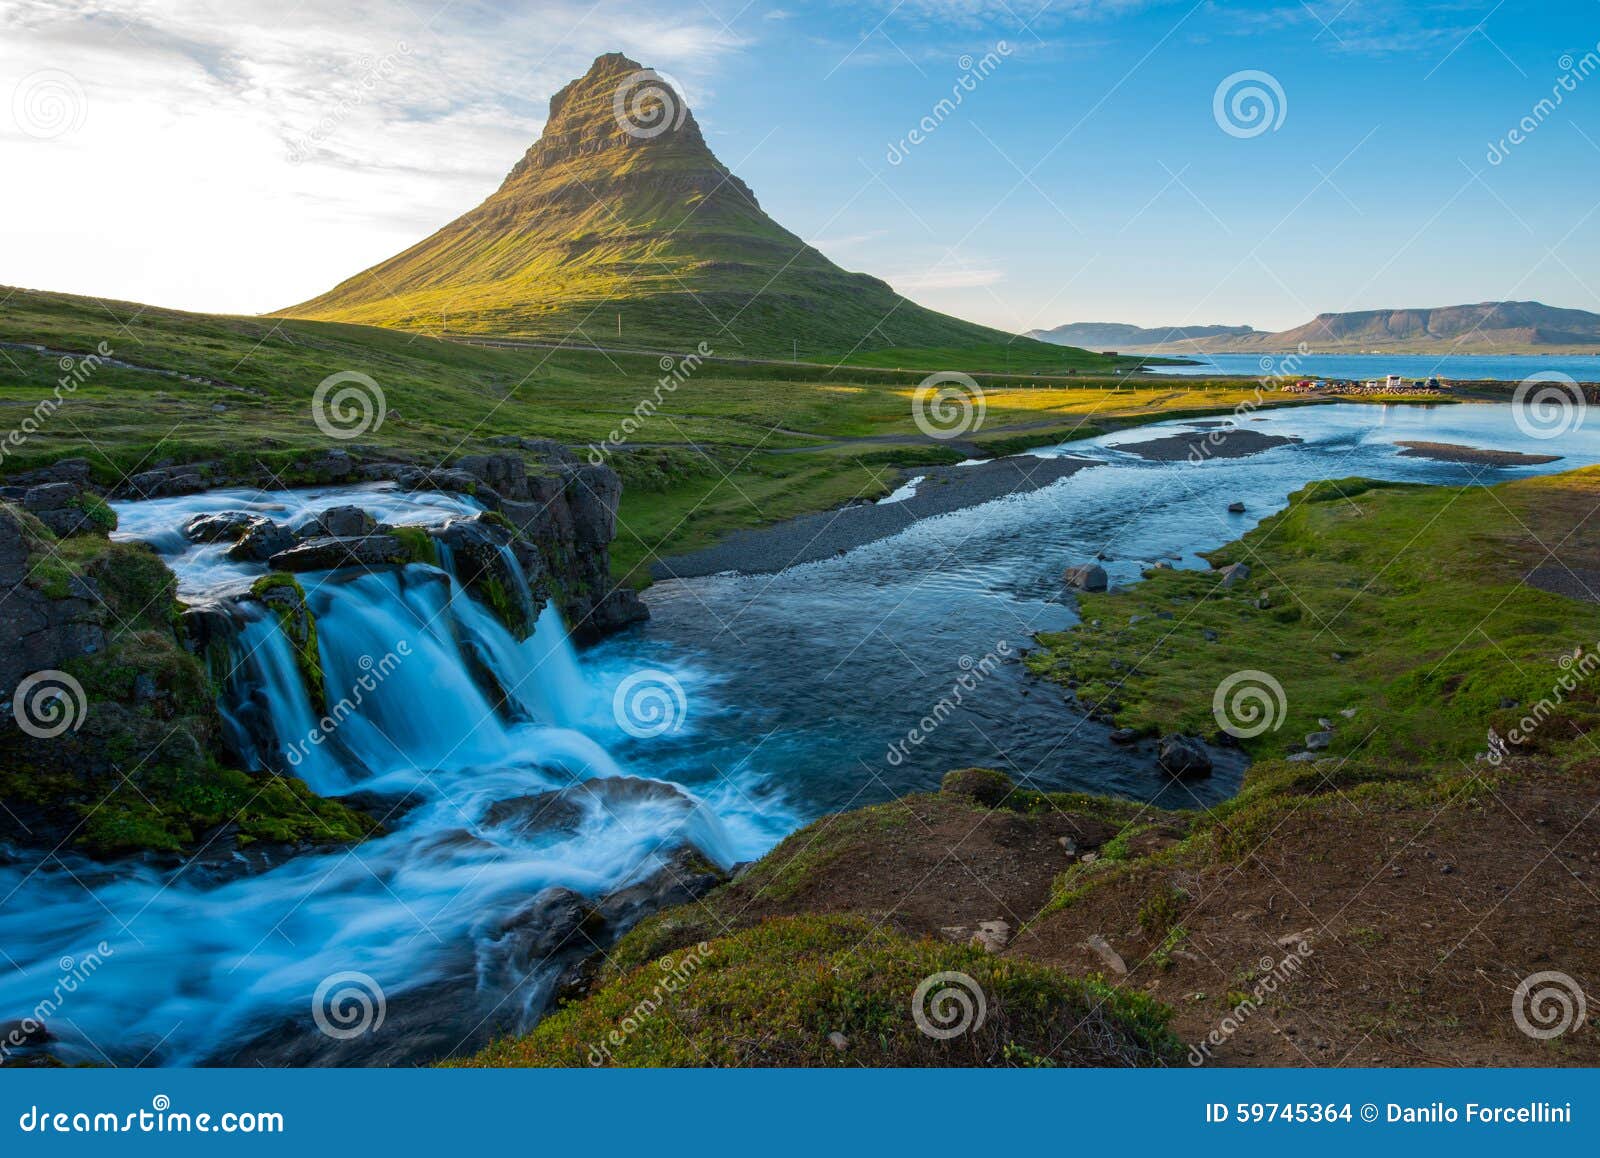 kirkjufell mountain, snaefellsnes peninsula, iceland